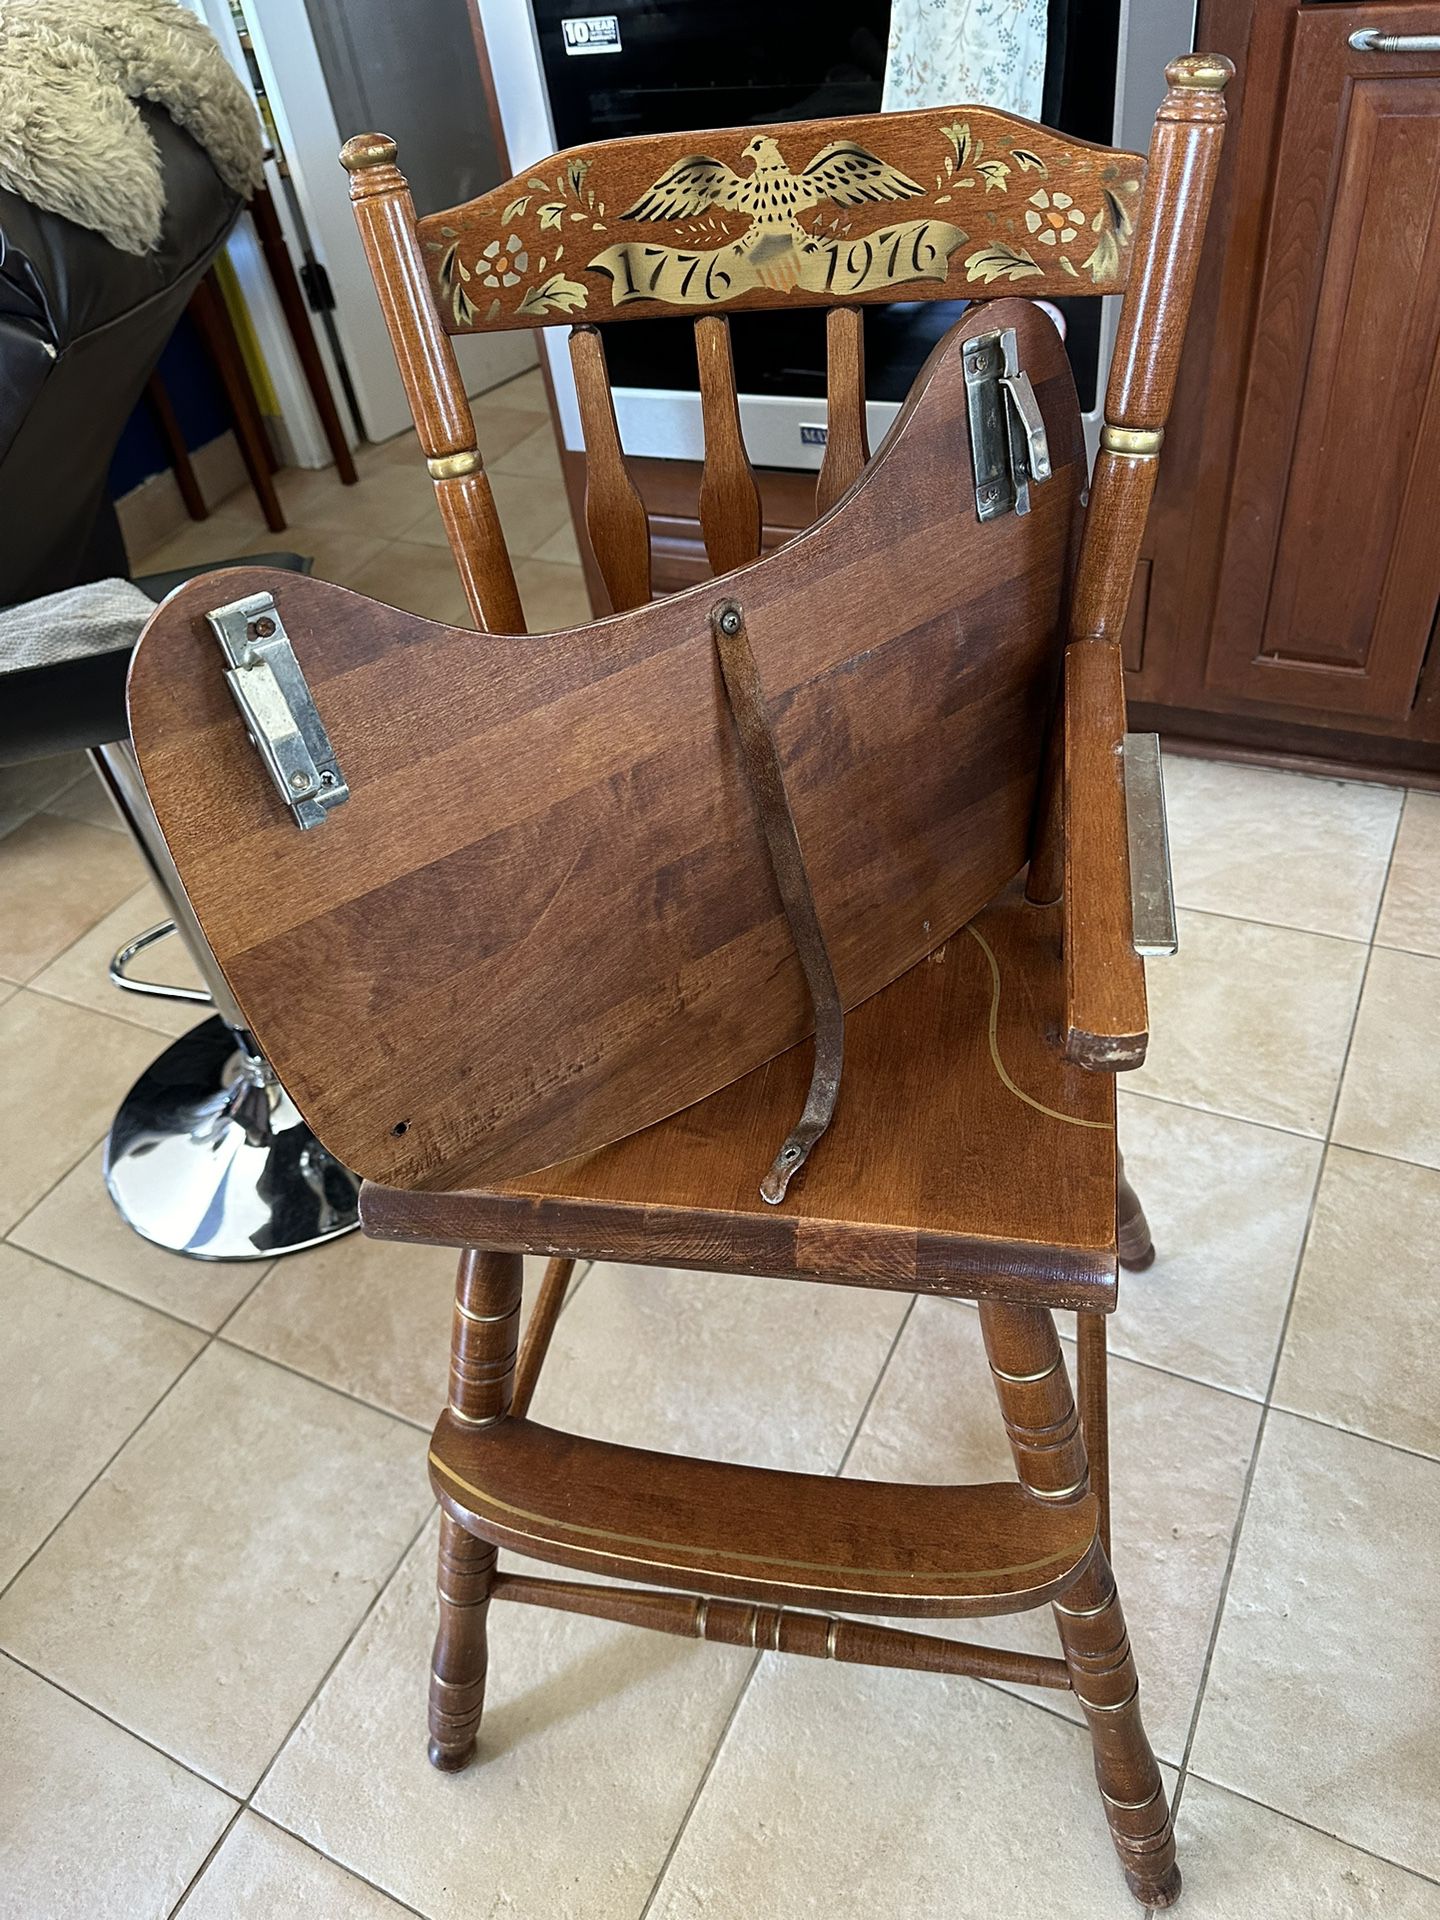 Vintage Bicentennial High Chair 